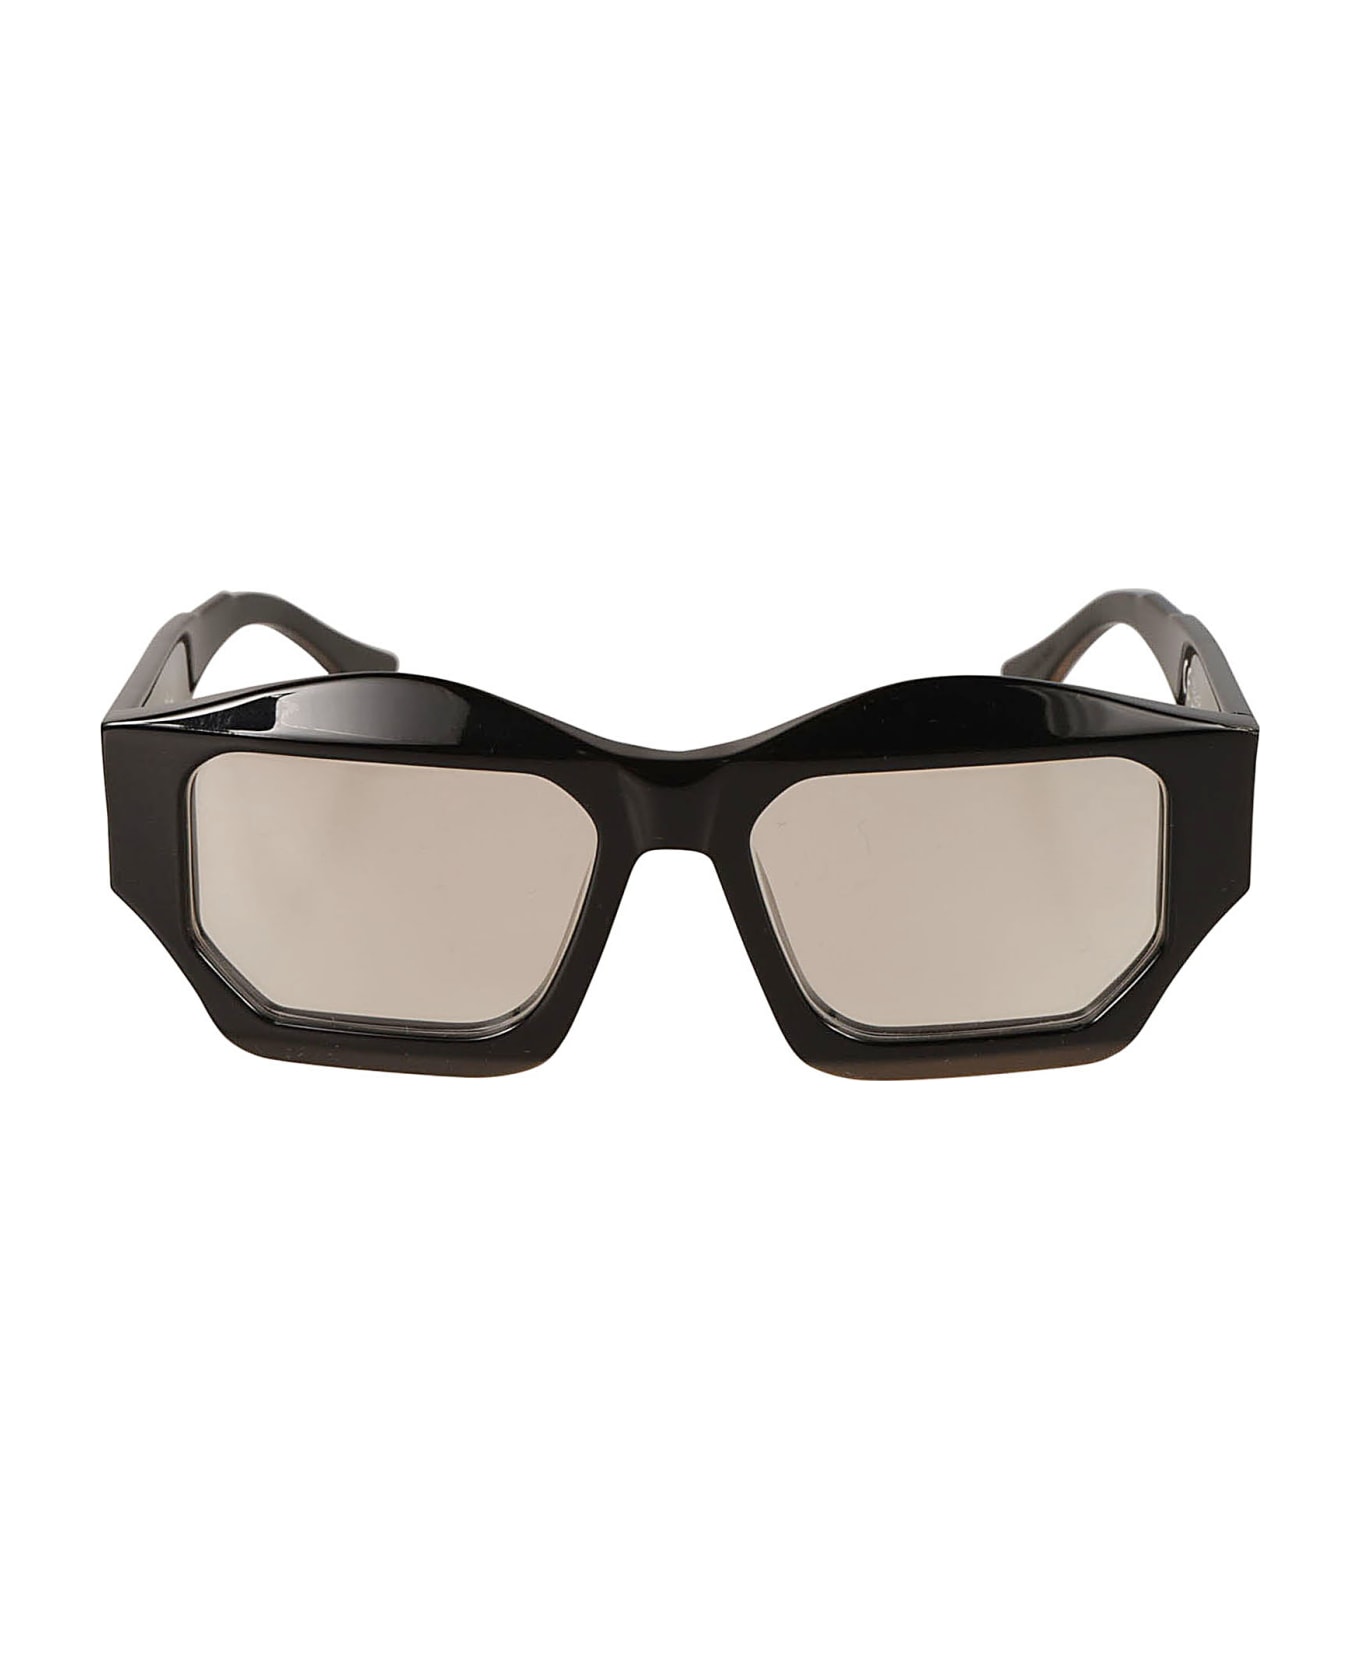 Kuboraum F4 Glasses Glasses - black アイウェア